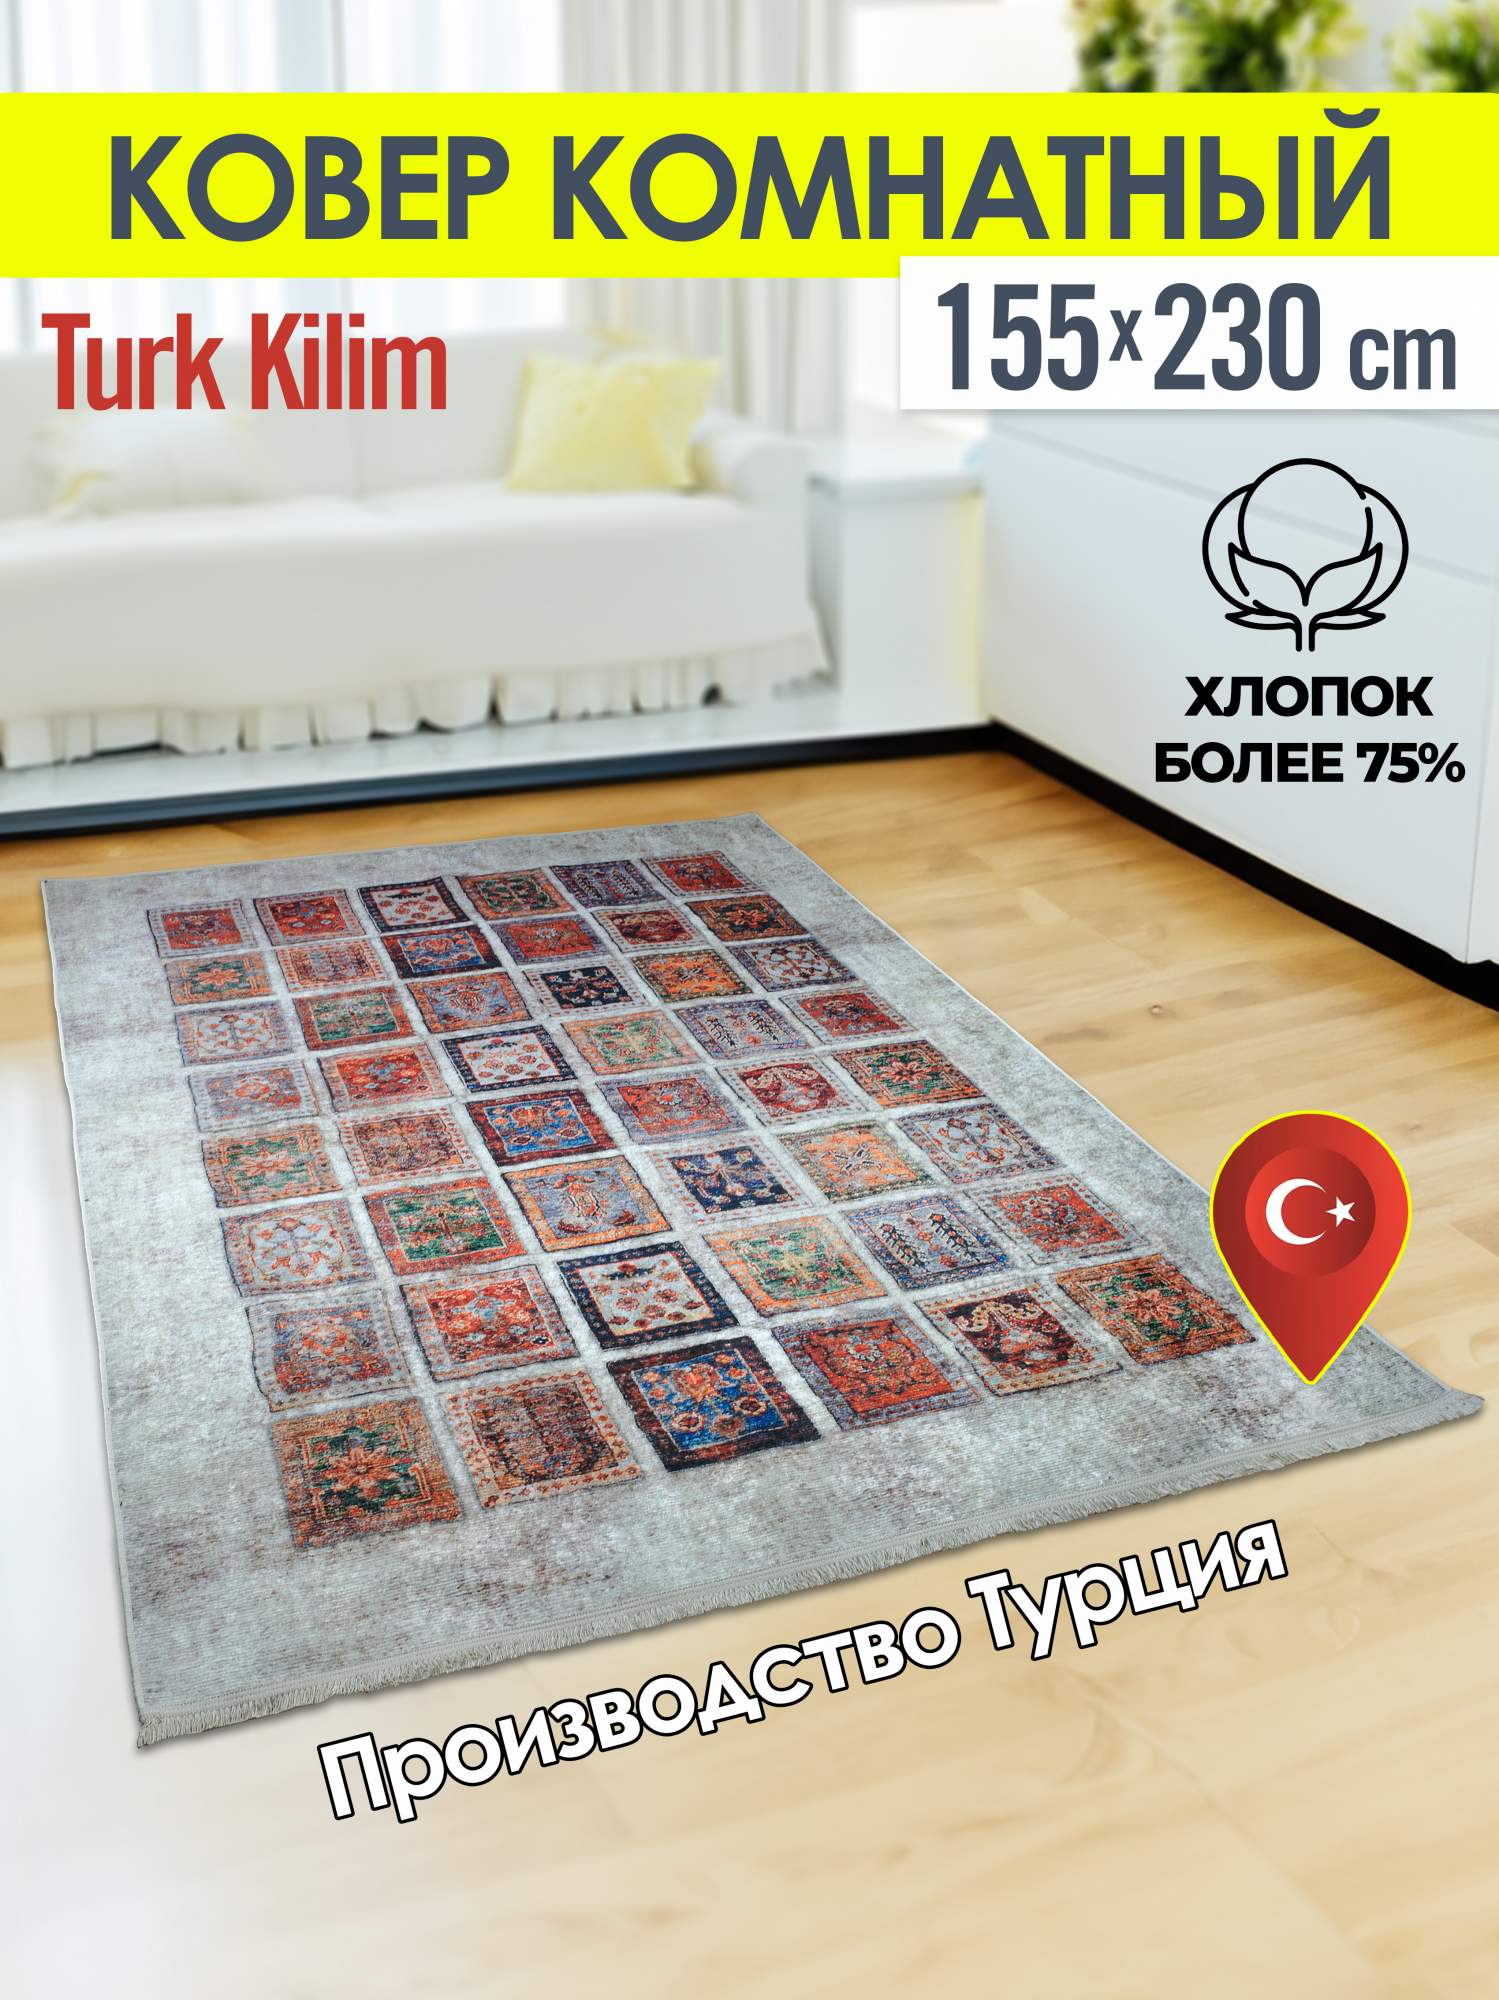 Ковёр турецкий комнатный из хлопка Turk- kilim 155x230 4072А